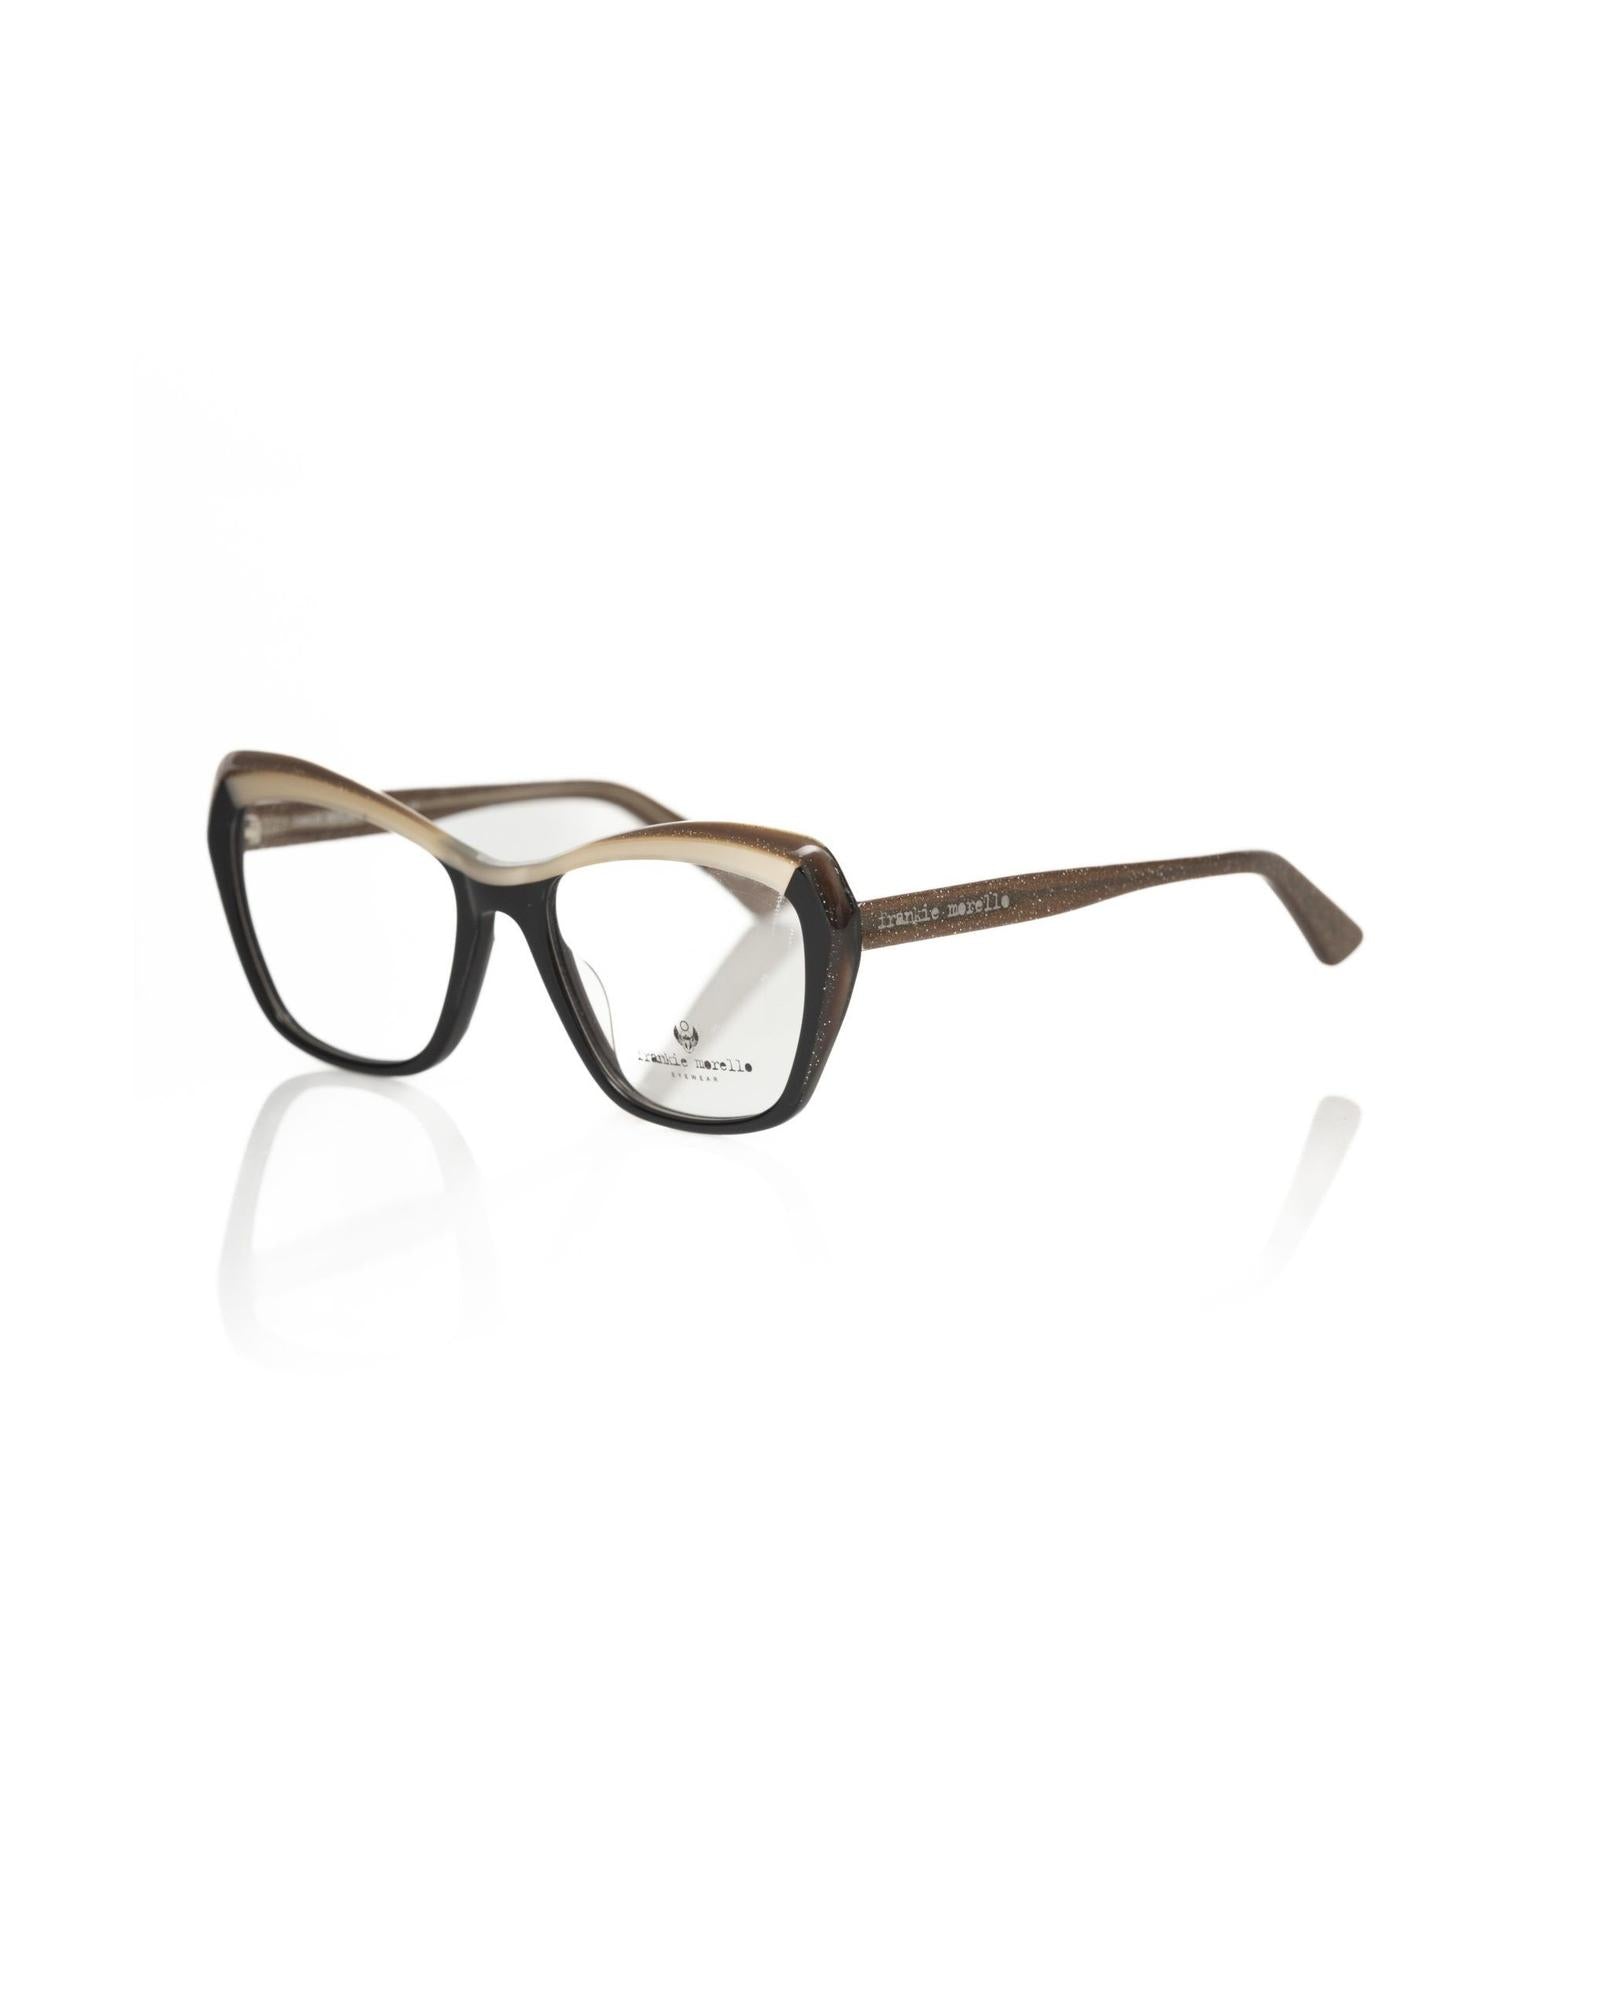 Glittered Cat Eye Eyeglasses with Black and Cream Frame One Size Women